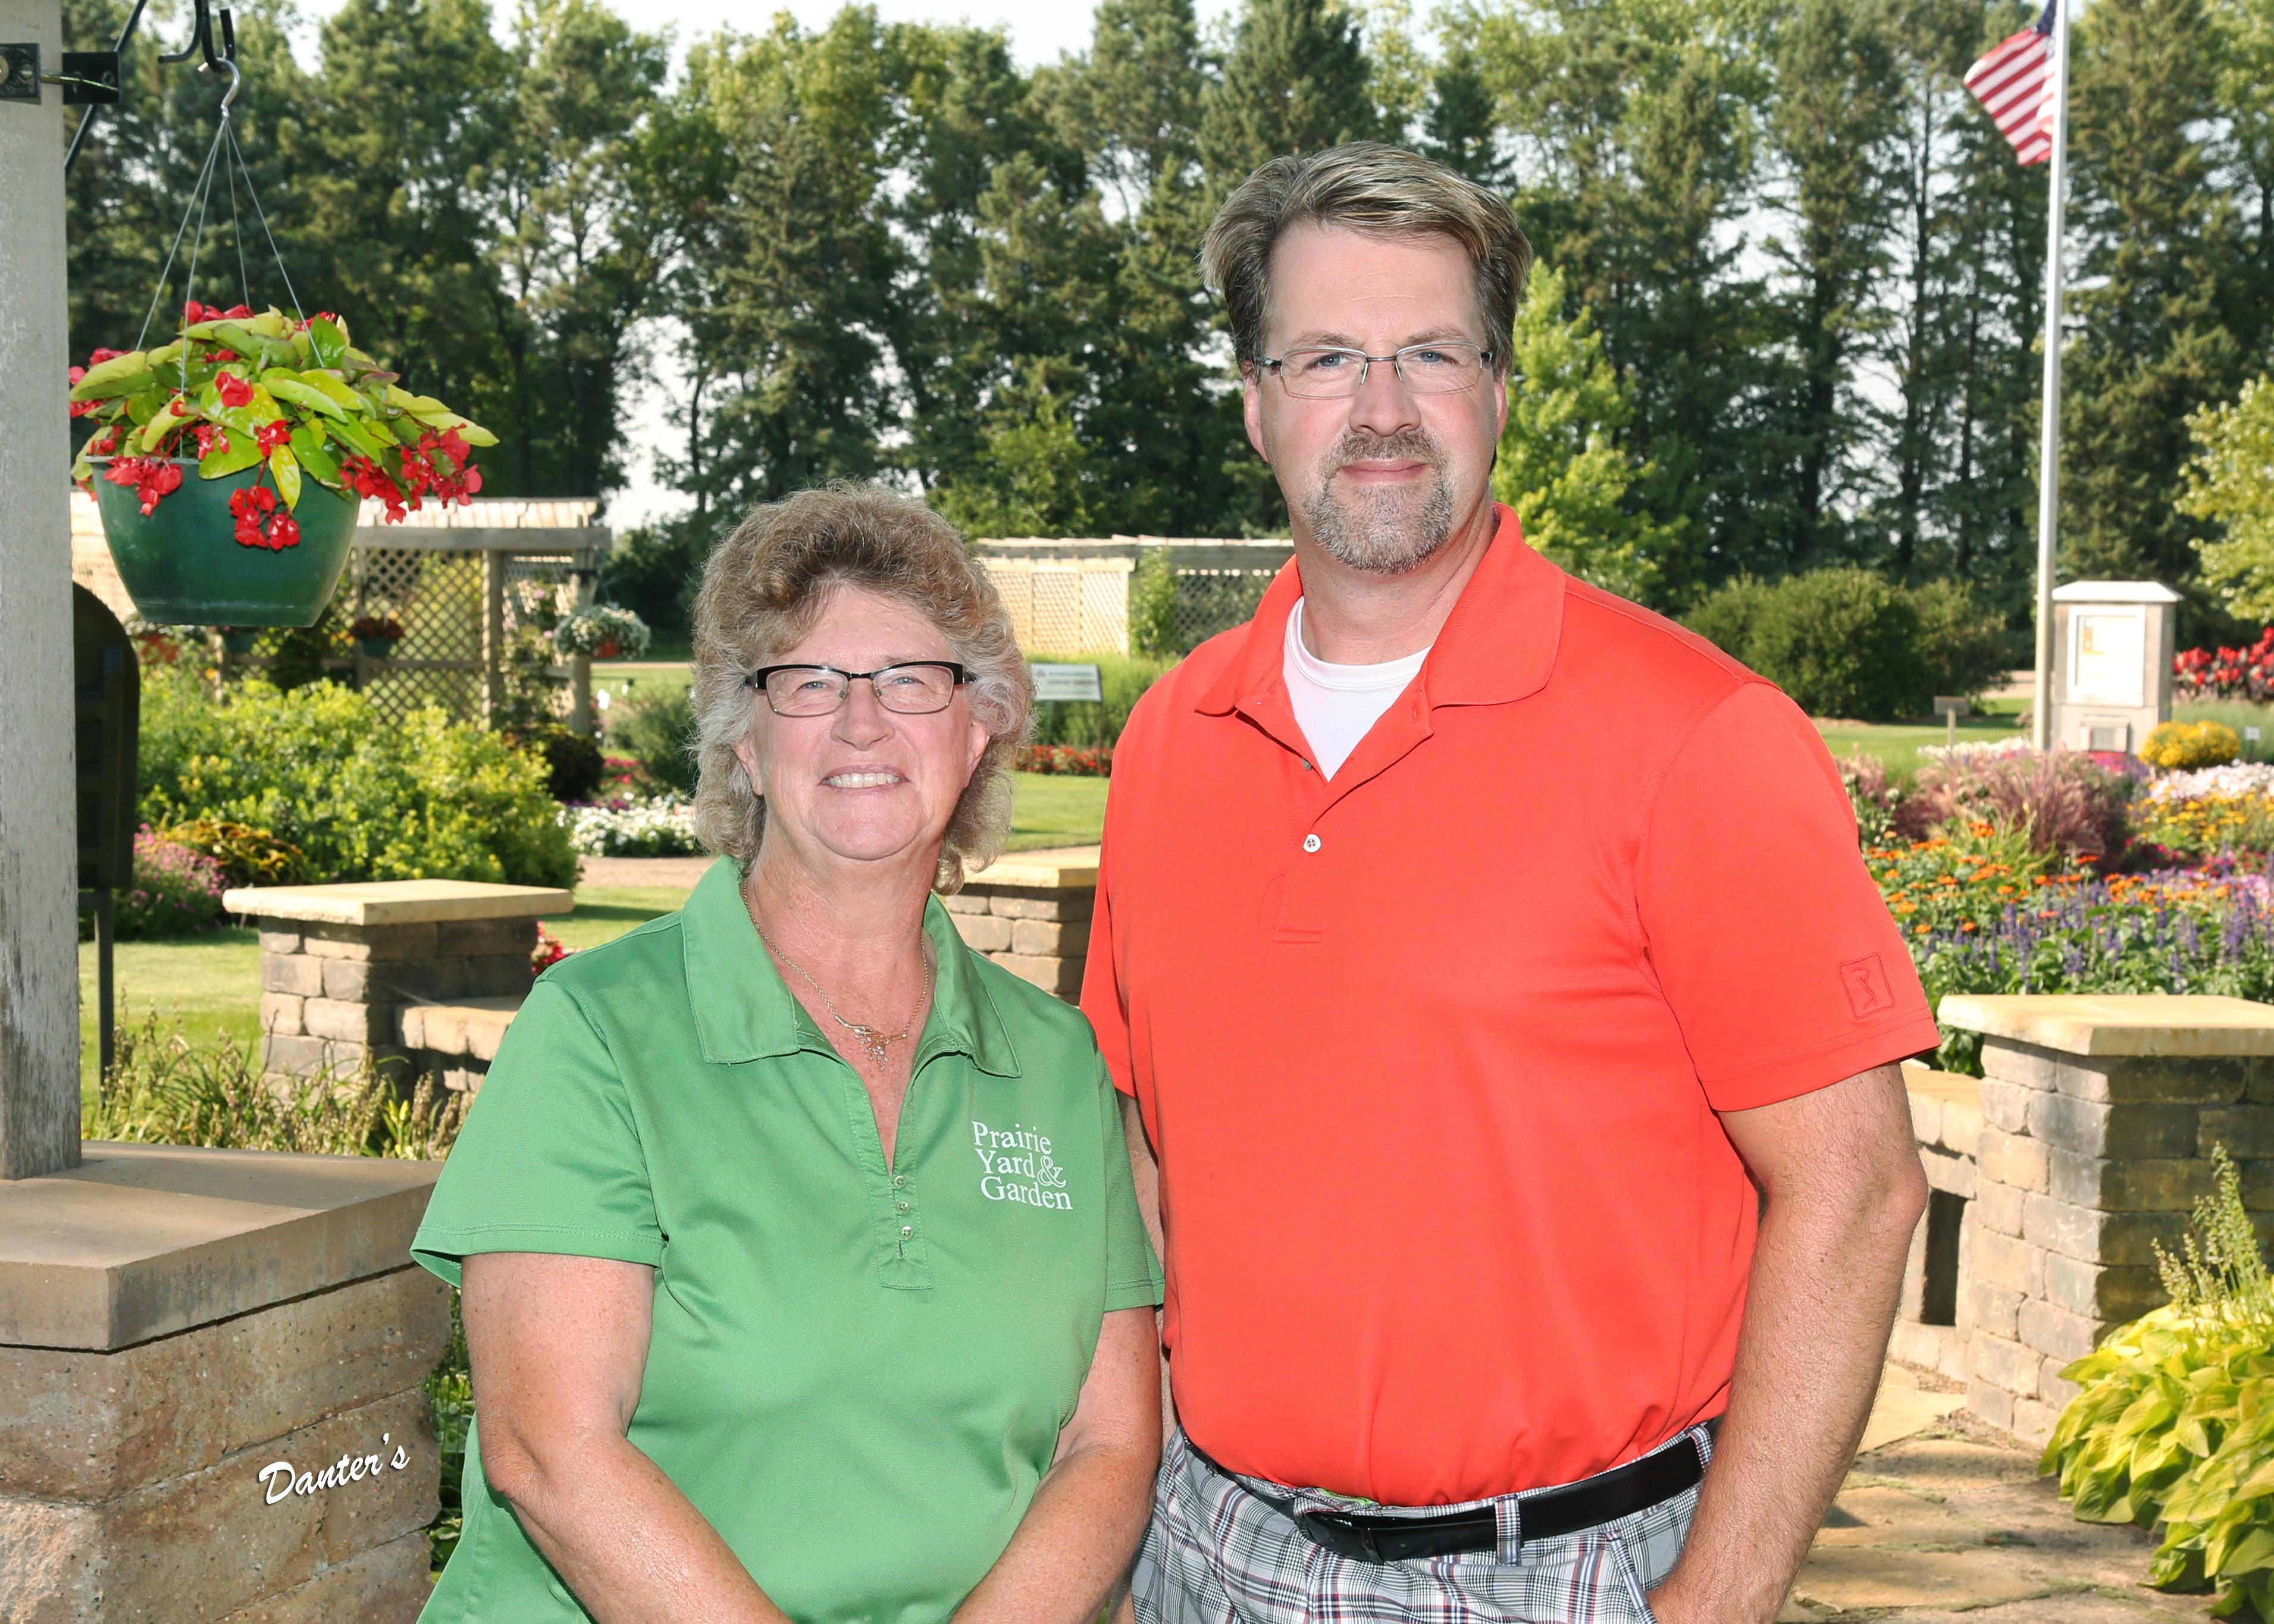  Prairie Yard & Garden host Mary Holm and Mike Cihak.